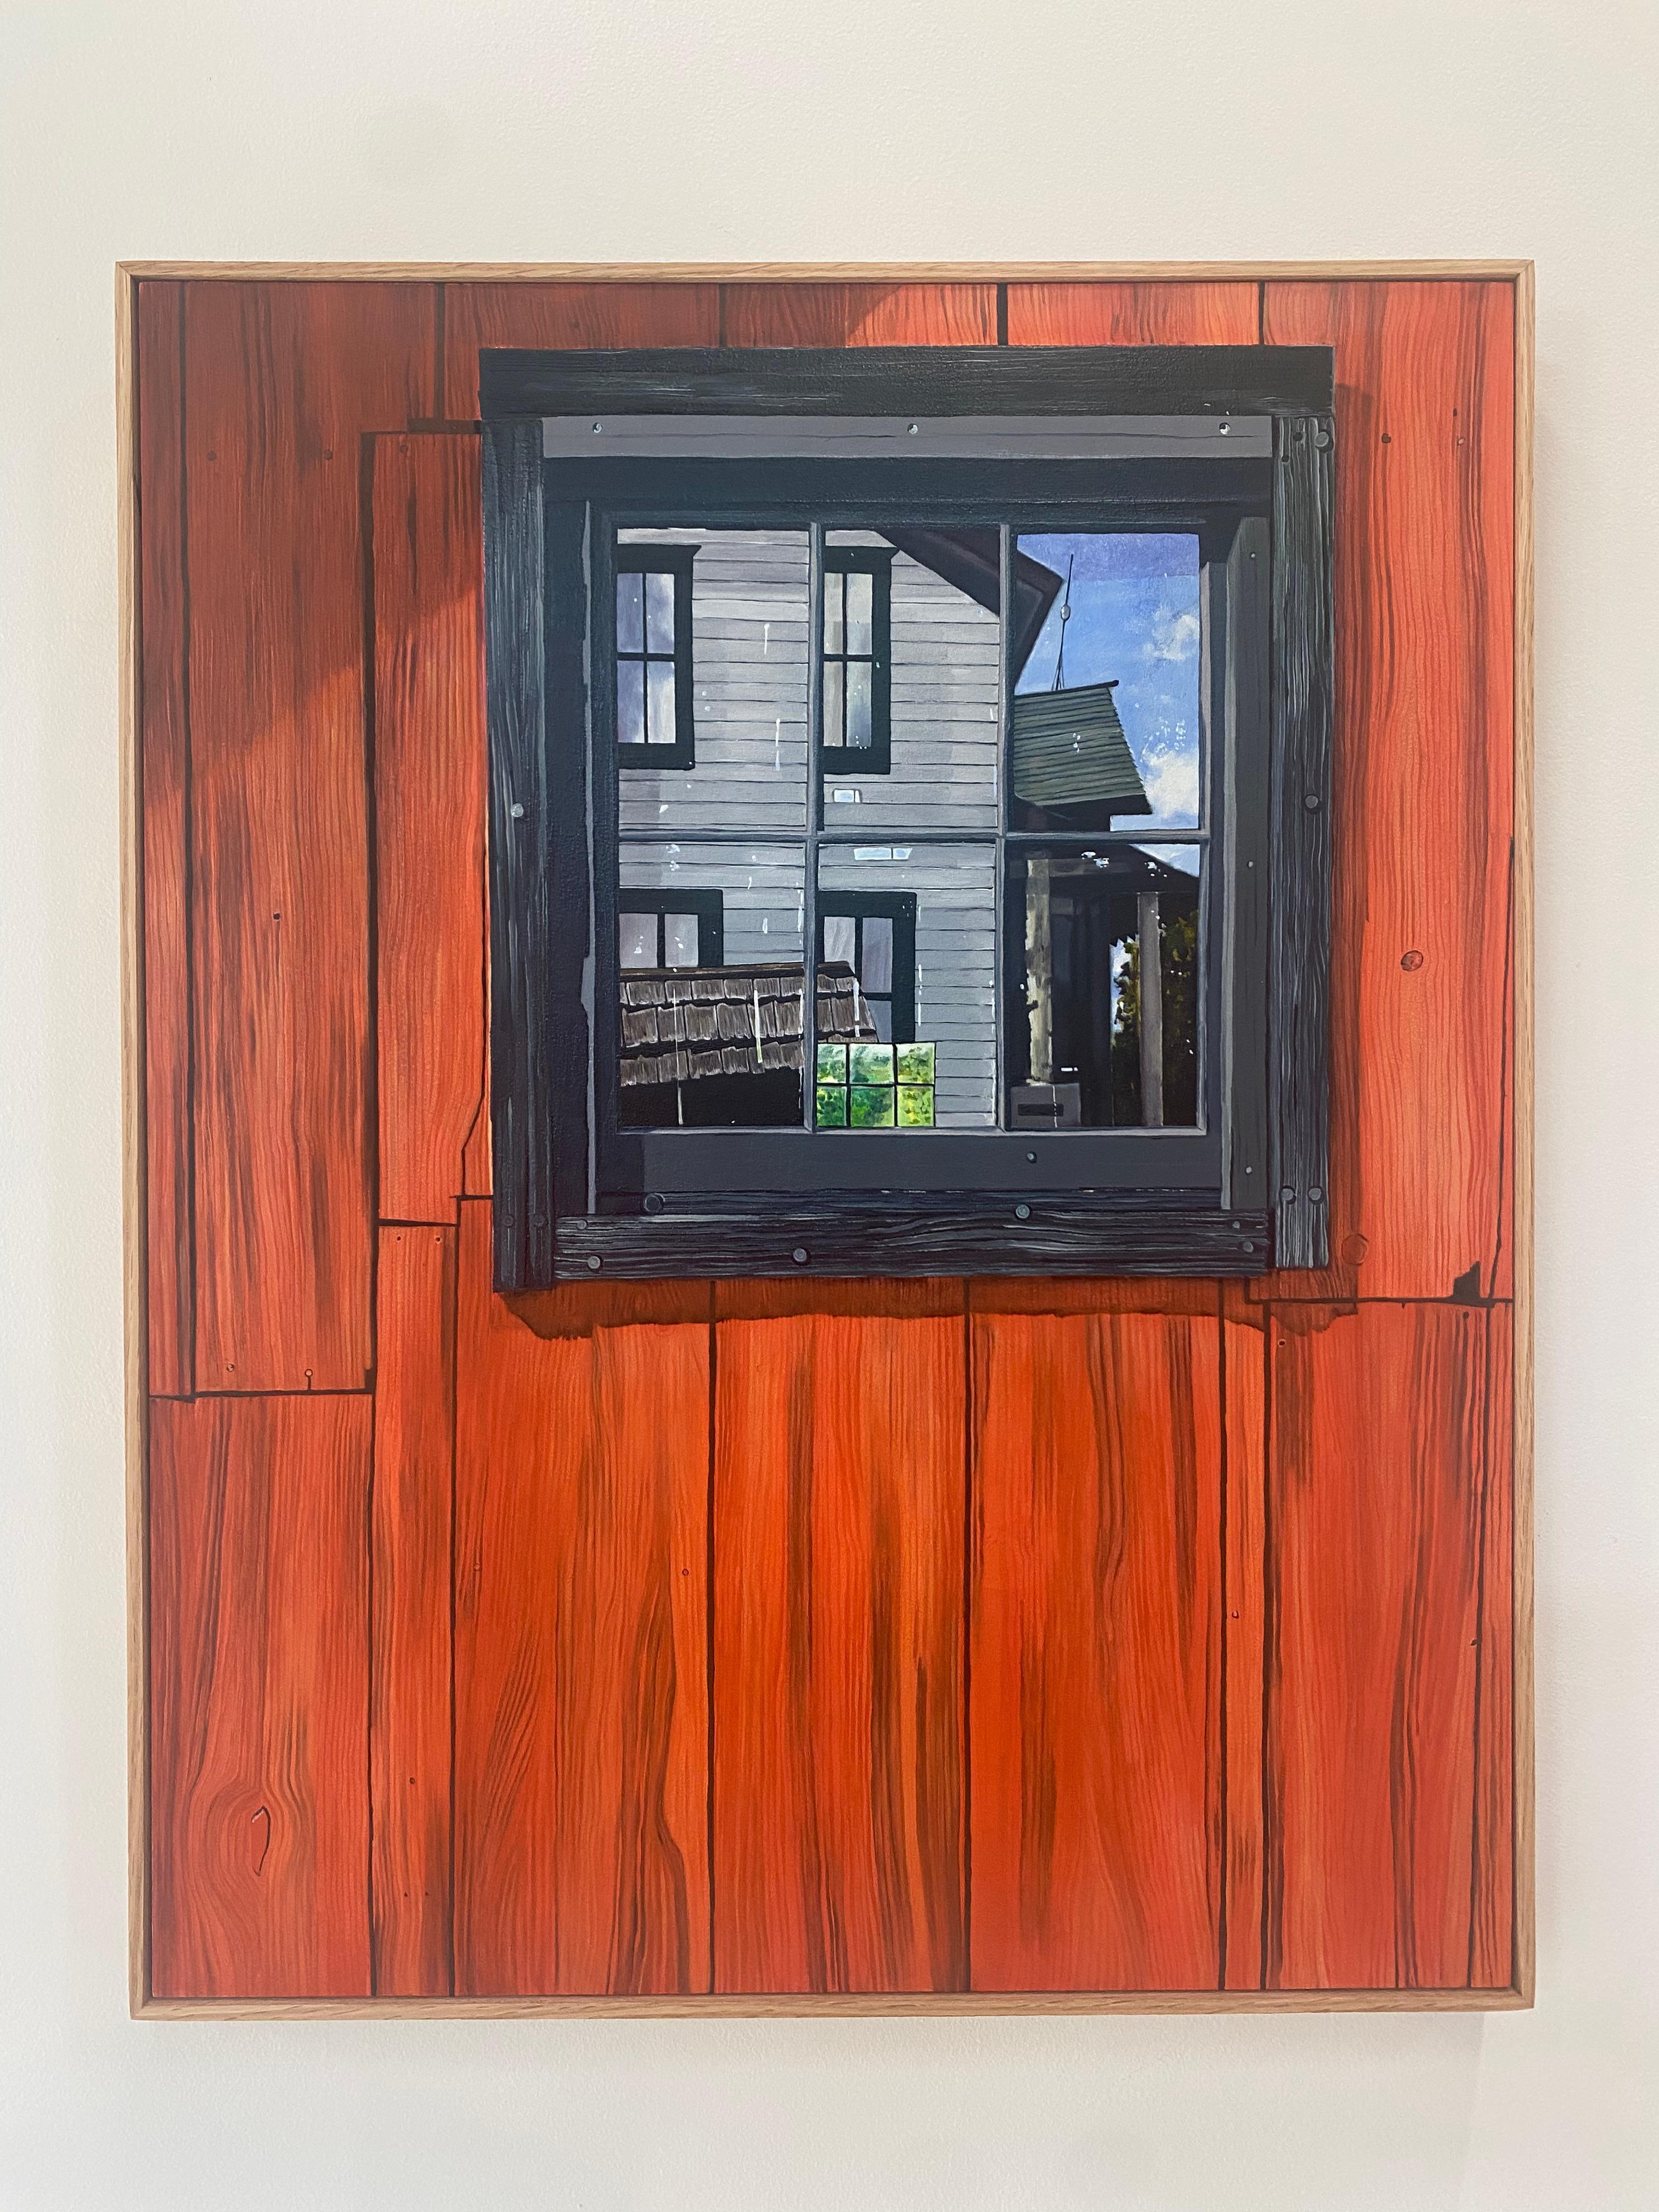 Barn Window, Crimson Red Wood, Blue Sky, Green Trees Reflection - Painting by Amanda Acker